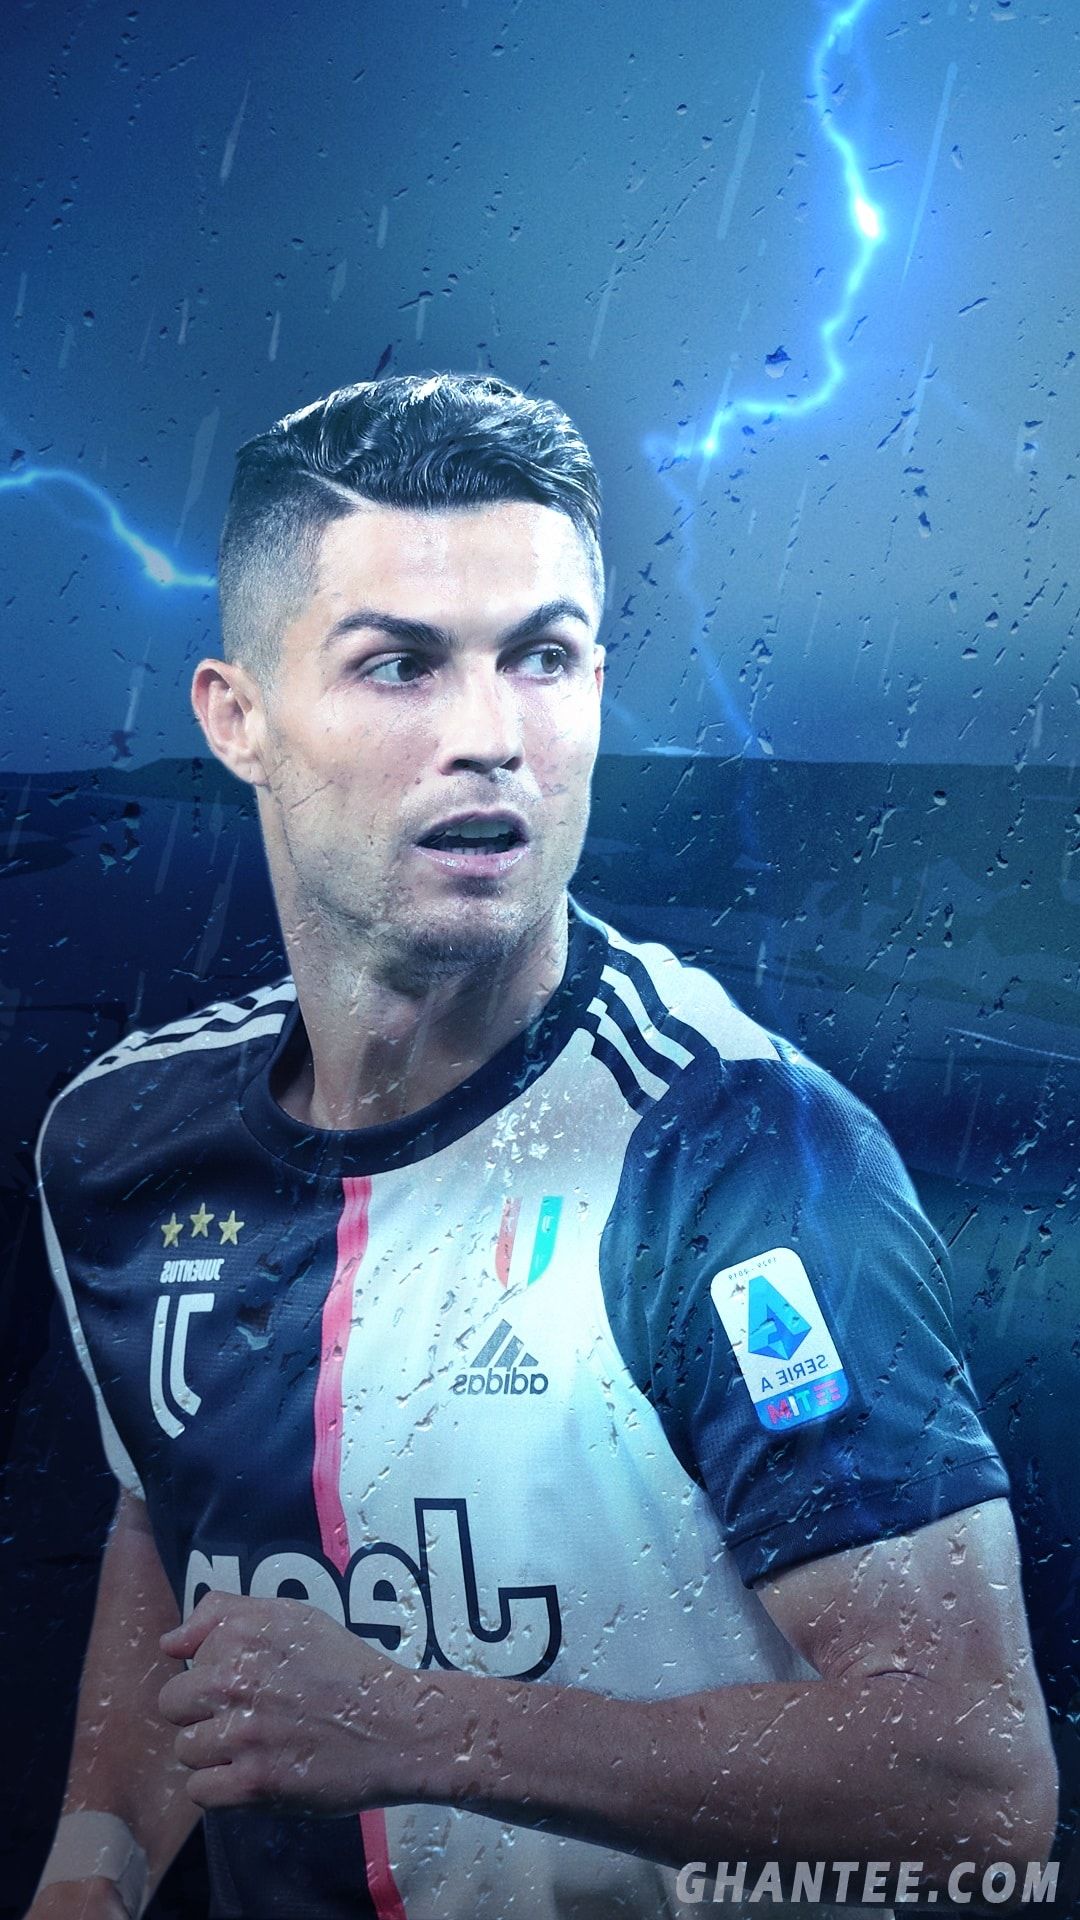 Download Free 100 Cristiano Ronaldo Hd Wallpapers